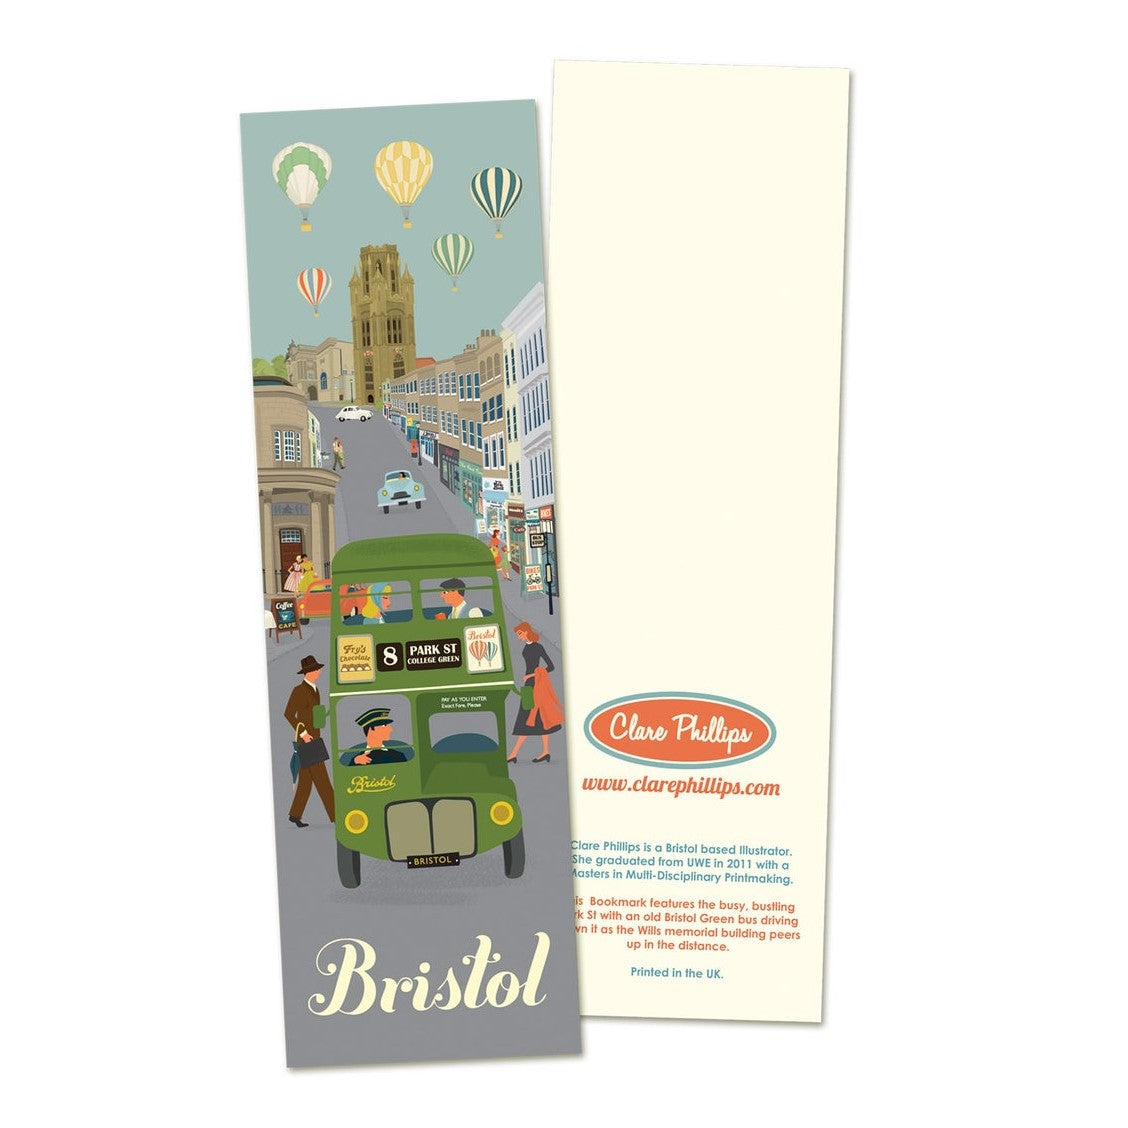 Bristol Bookmark with illustration of vintage green bus on Park Street